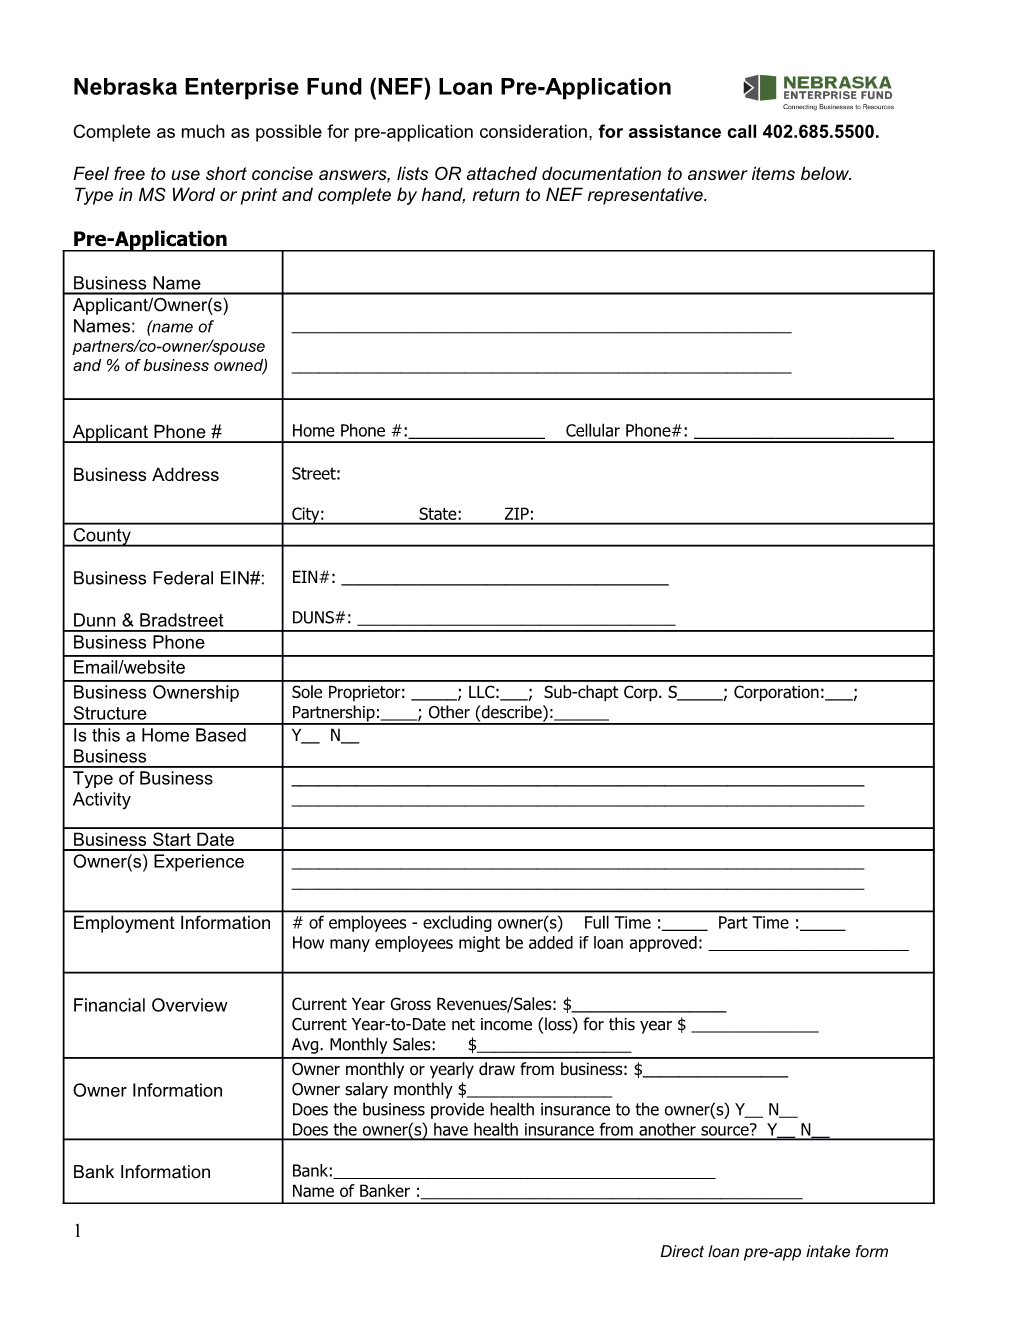 Nebraska Enterprise Fund Evergreen Loan Application Form